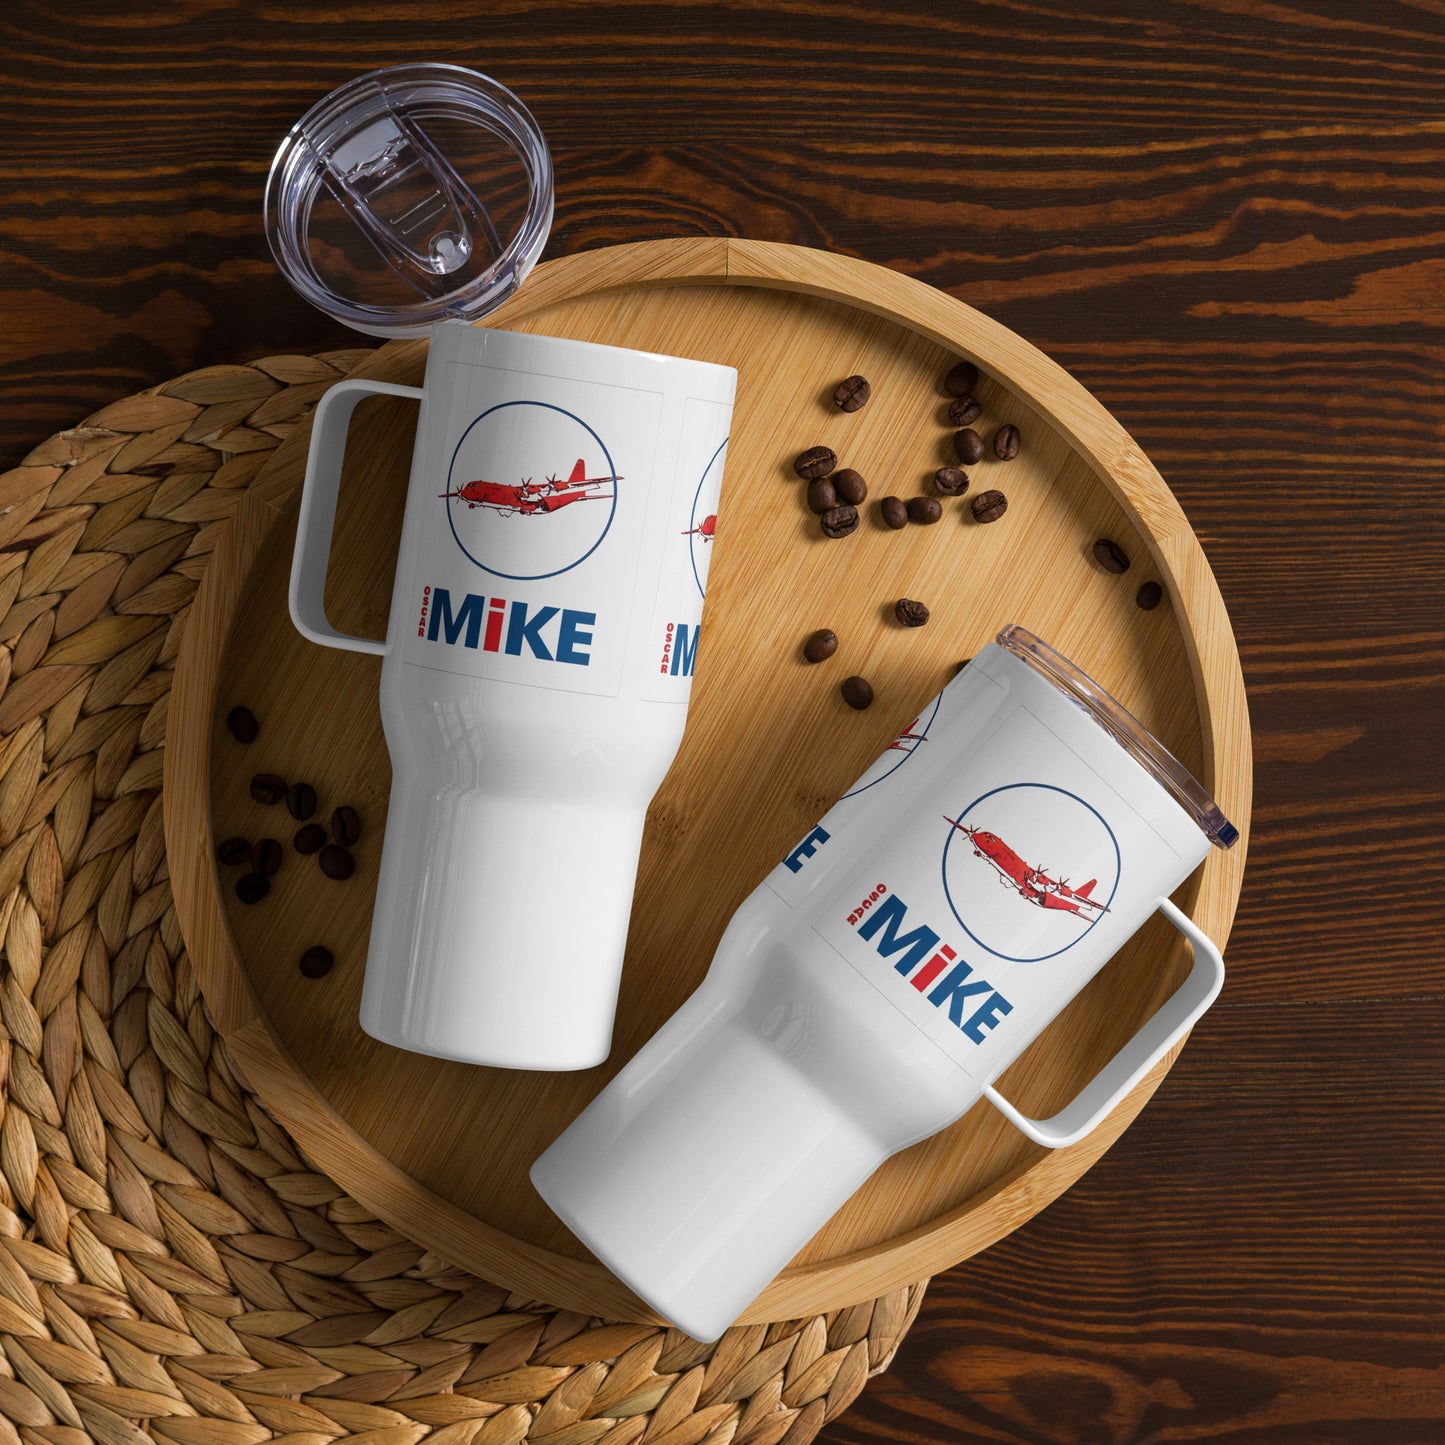 Oscar Mike “On Move” Travel mug with a handle